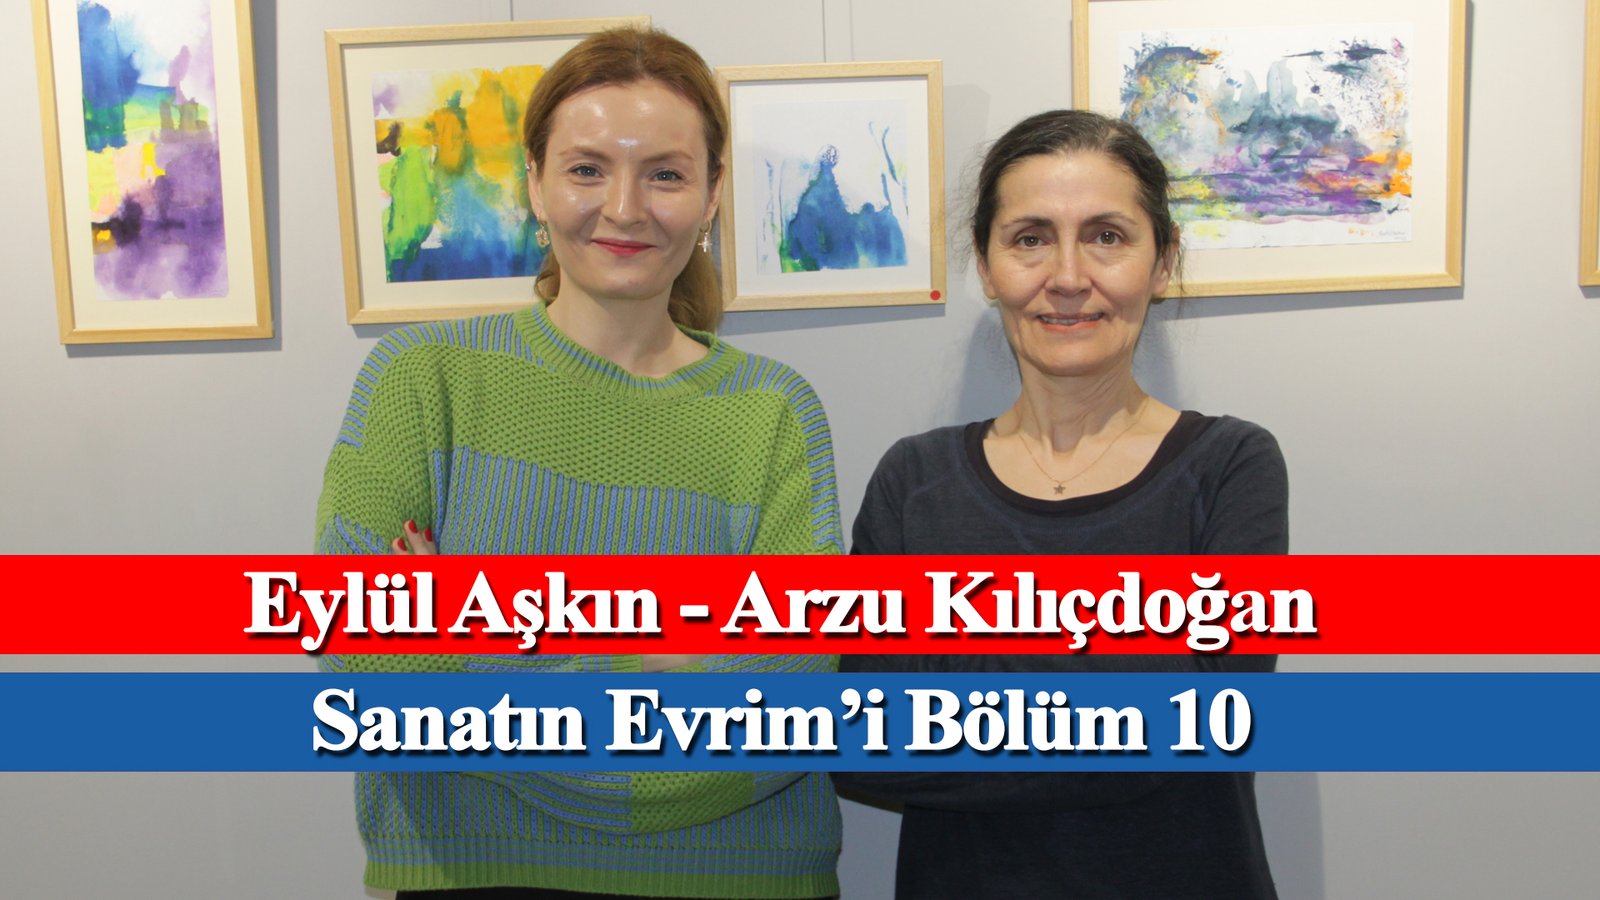 Artist Arzu Kılıçdoğan Is This Week's Guest In The Evolution Of Art Program